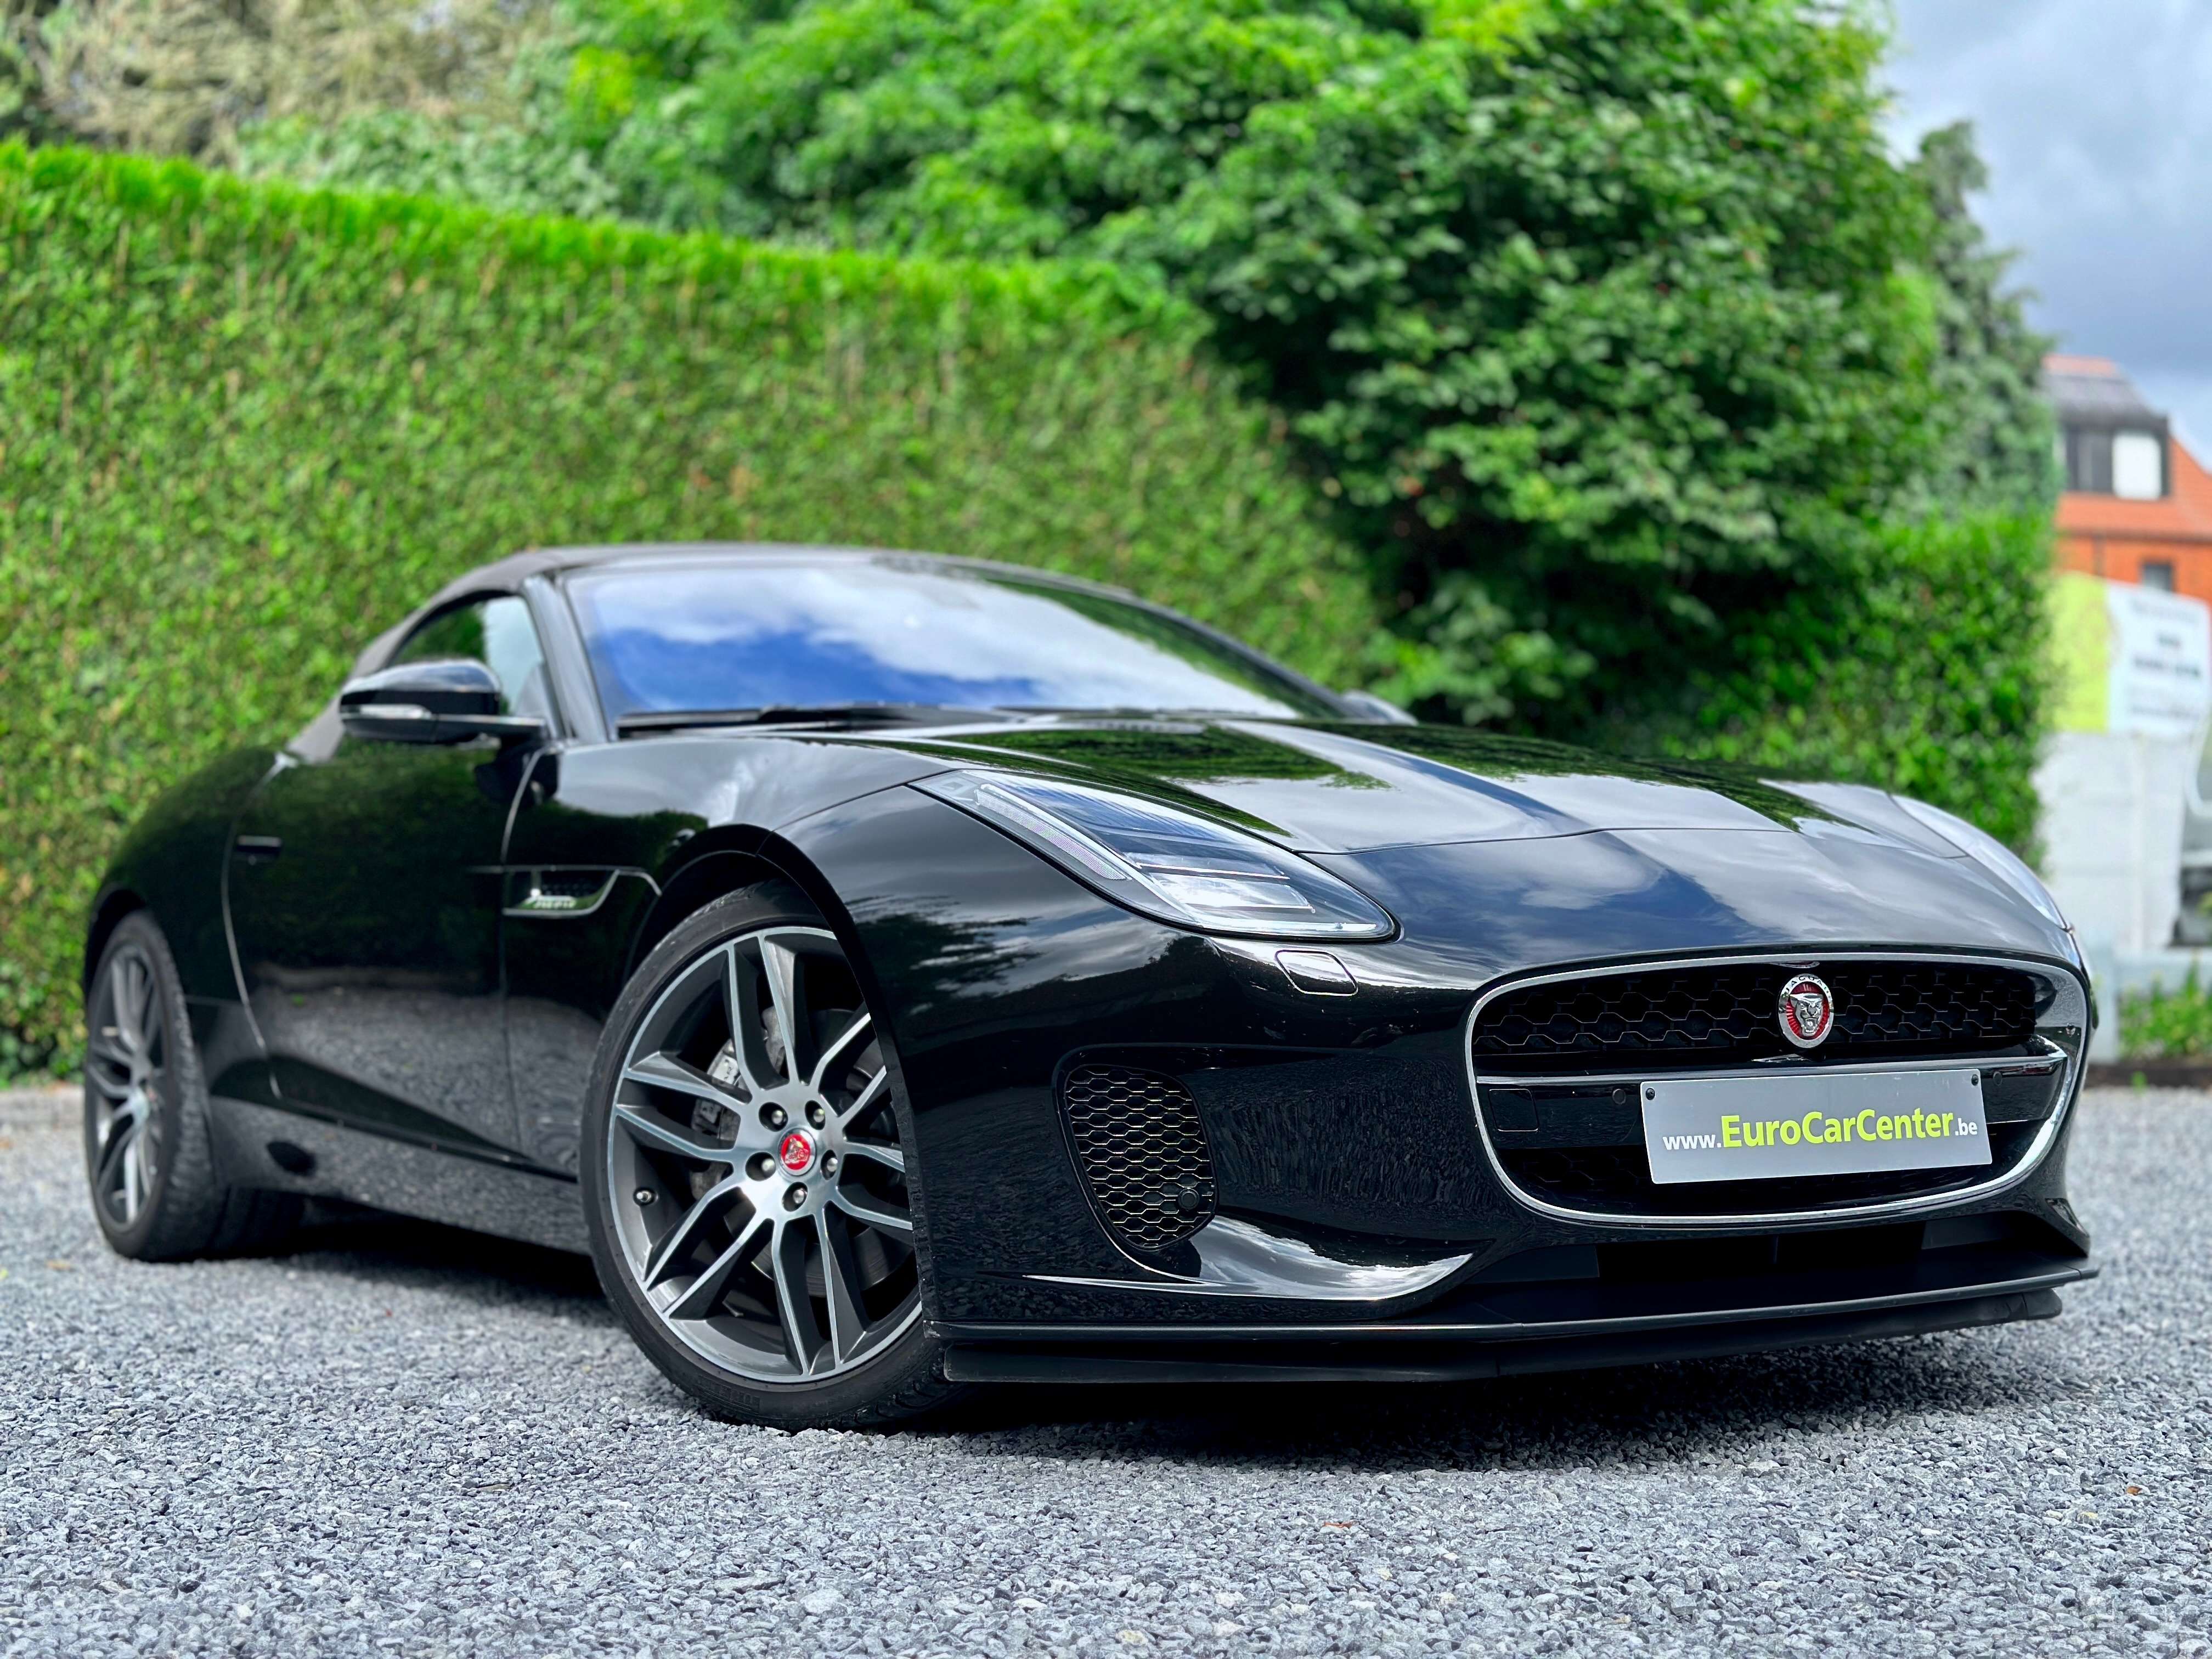 Jaguar F-Type Convertible in Black used in Gentbrugge for € 52,800.-